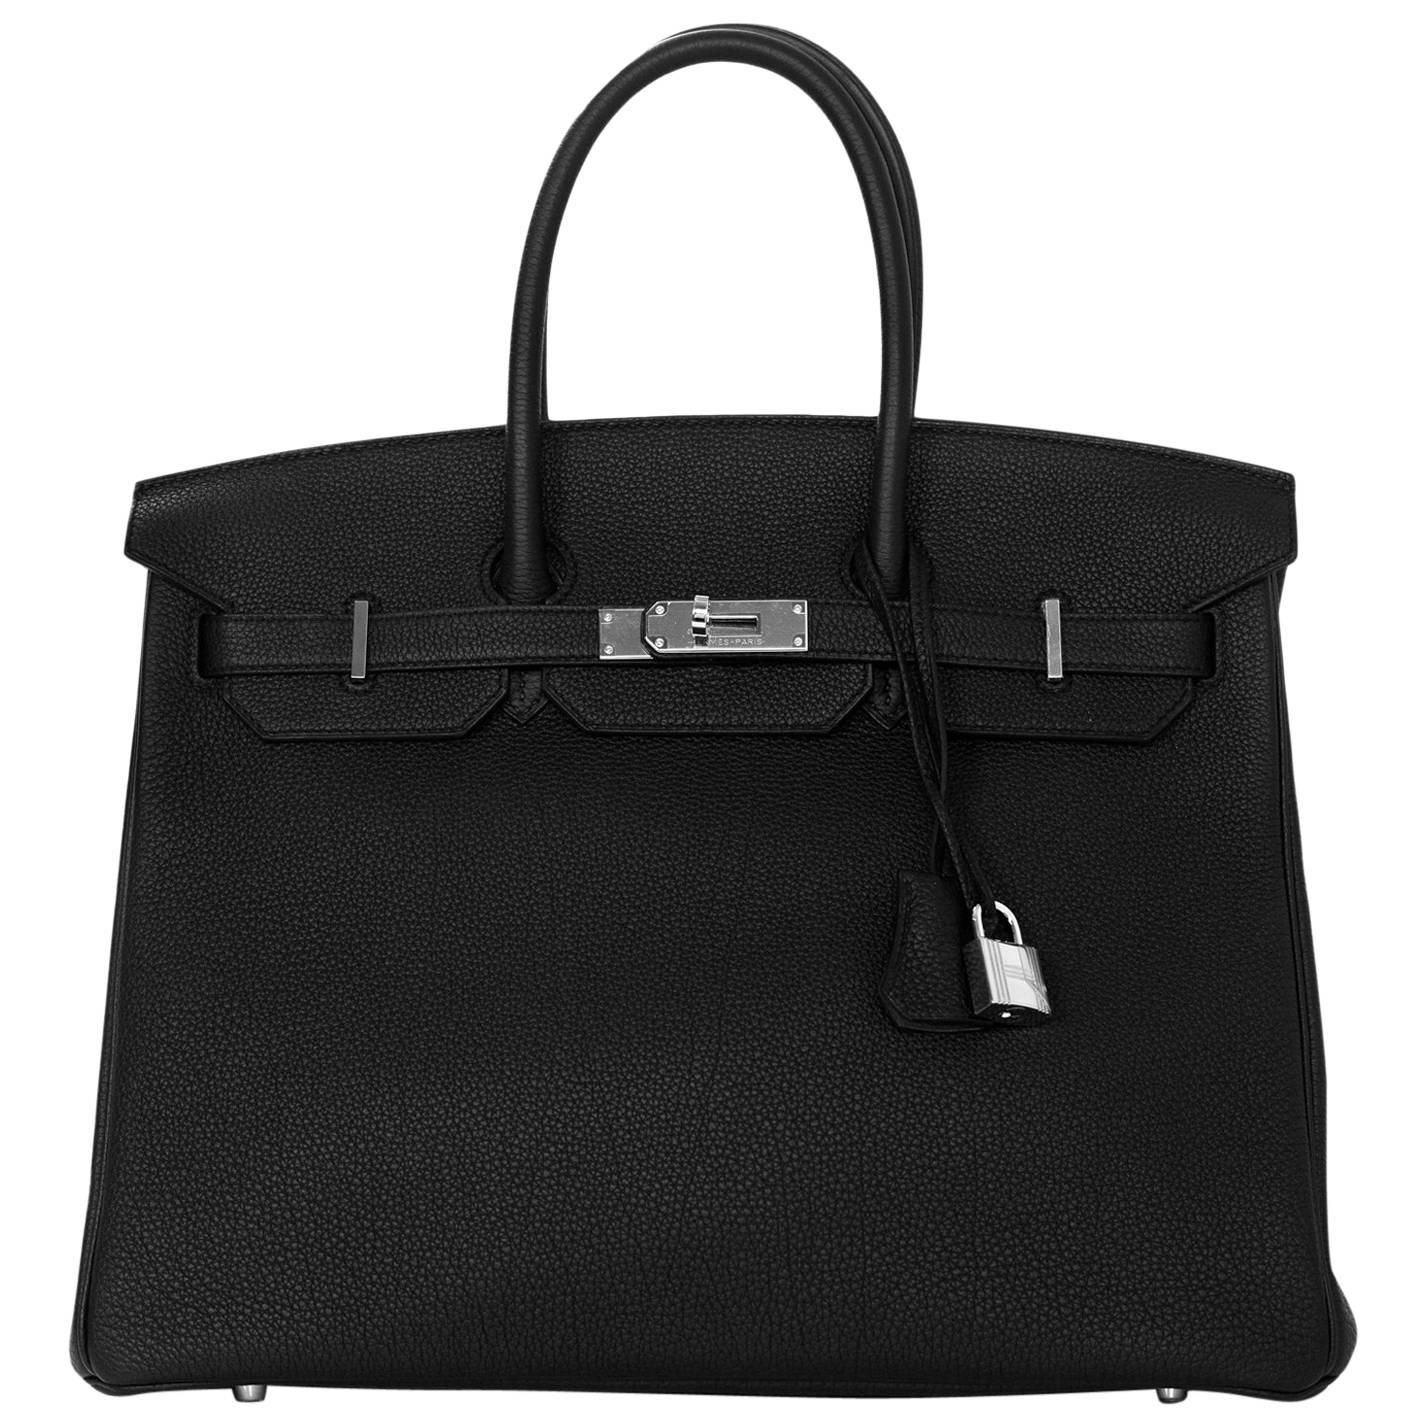 Hermes New 17 Noir Black/Bleu Blue Agate 35cm Togo Leather Birkin Bag w Receipt